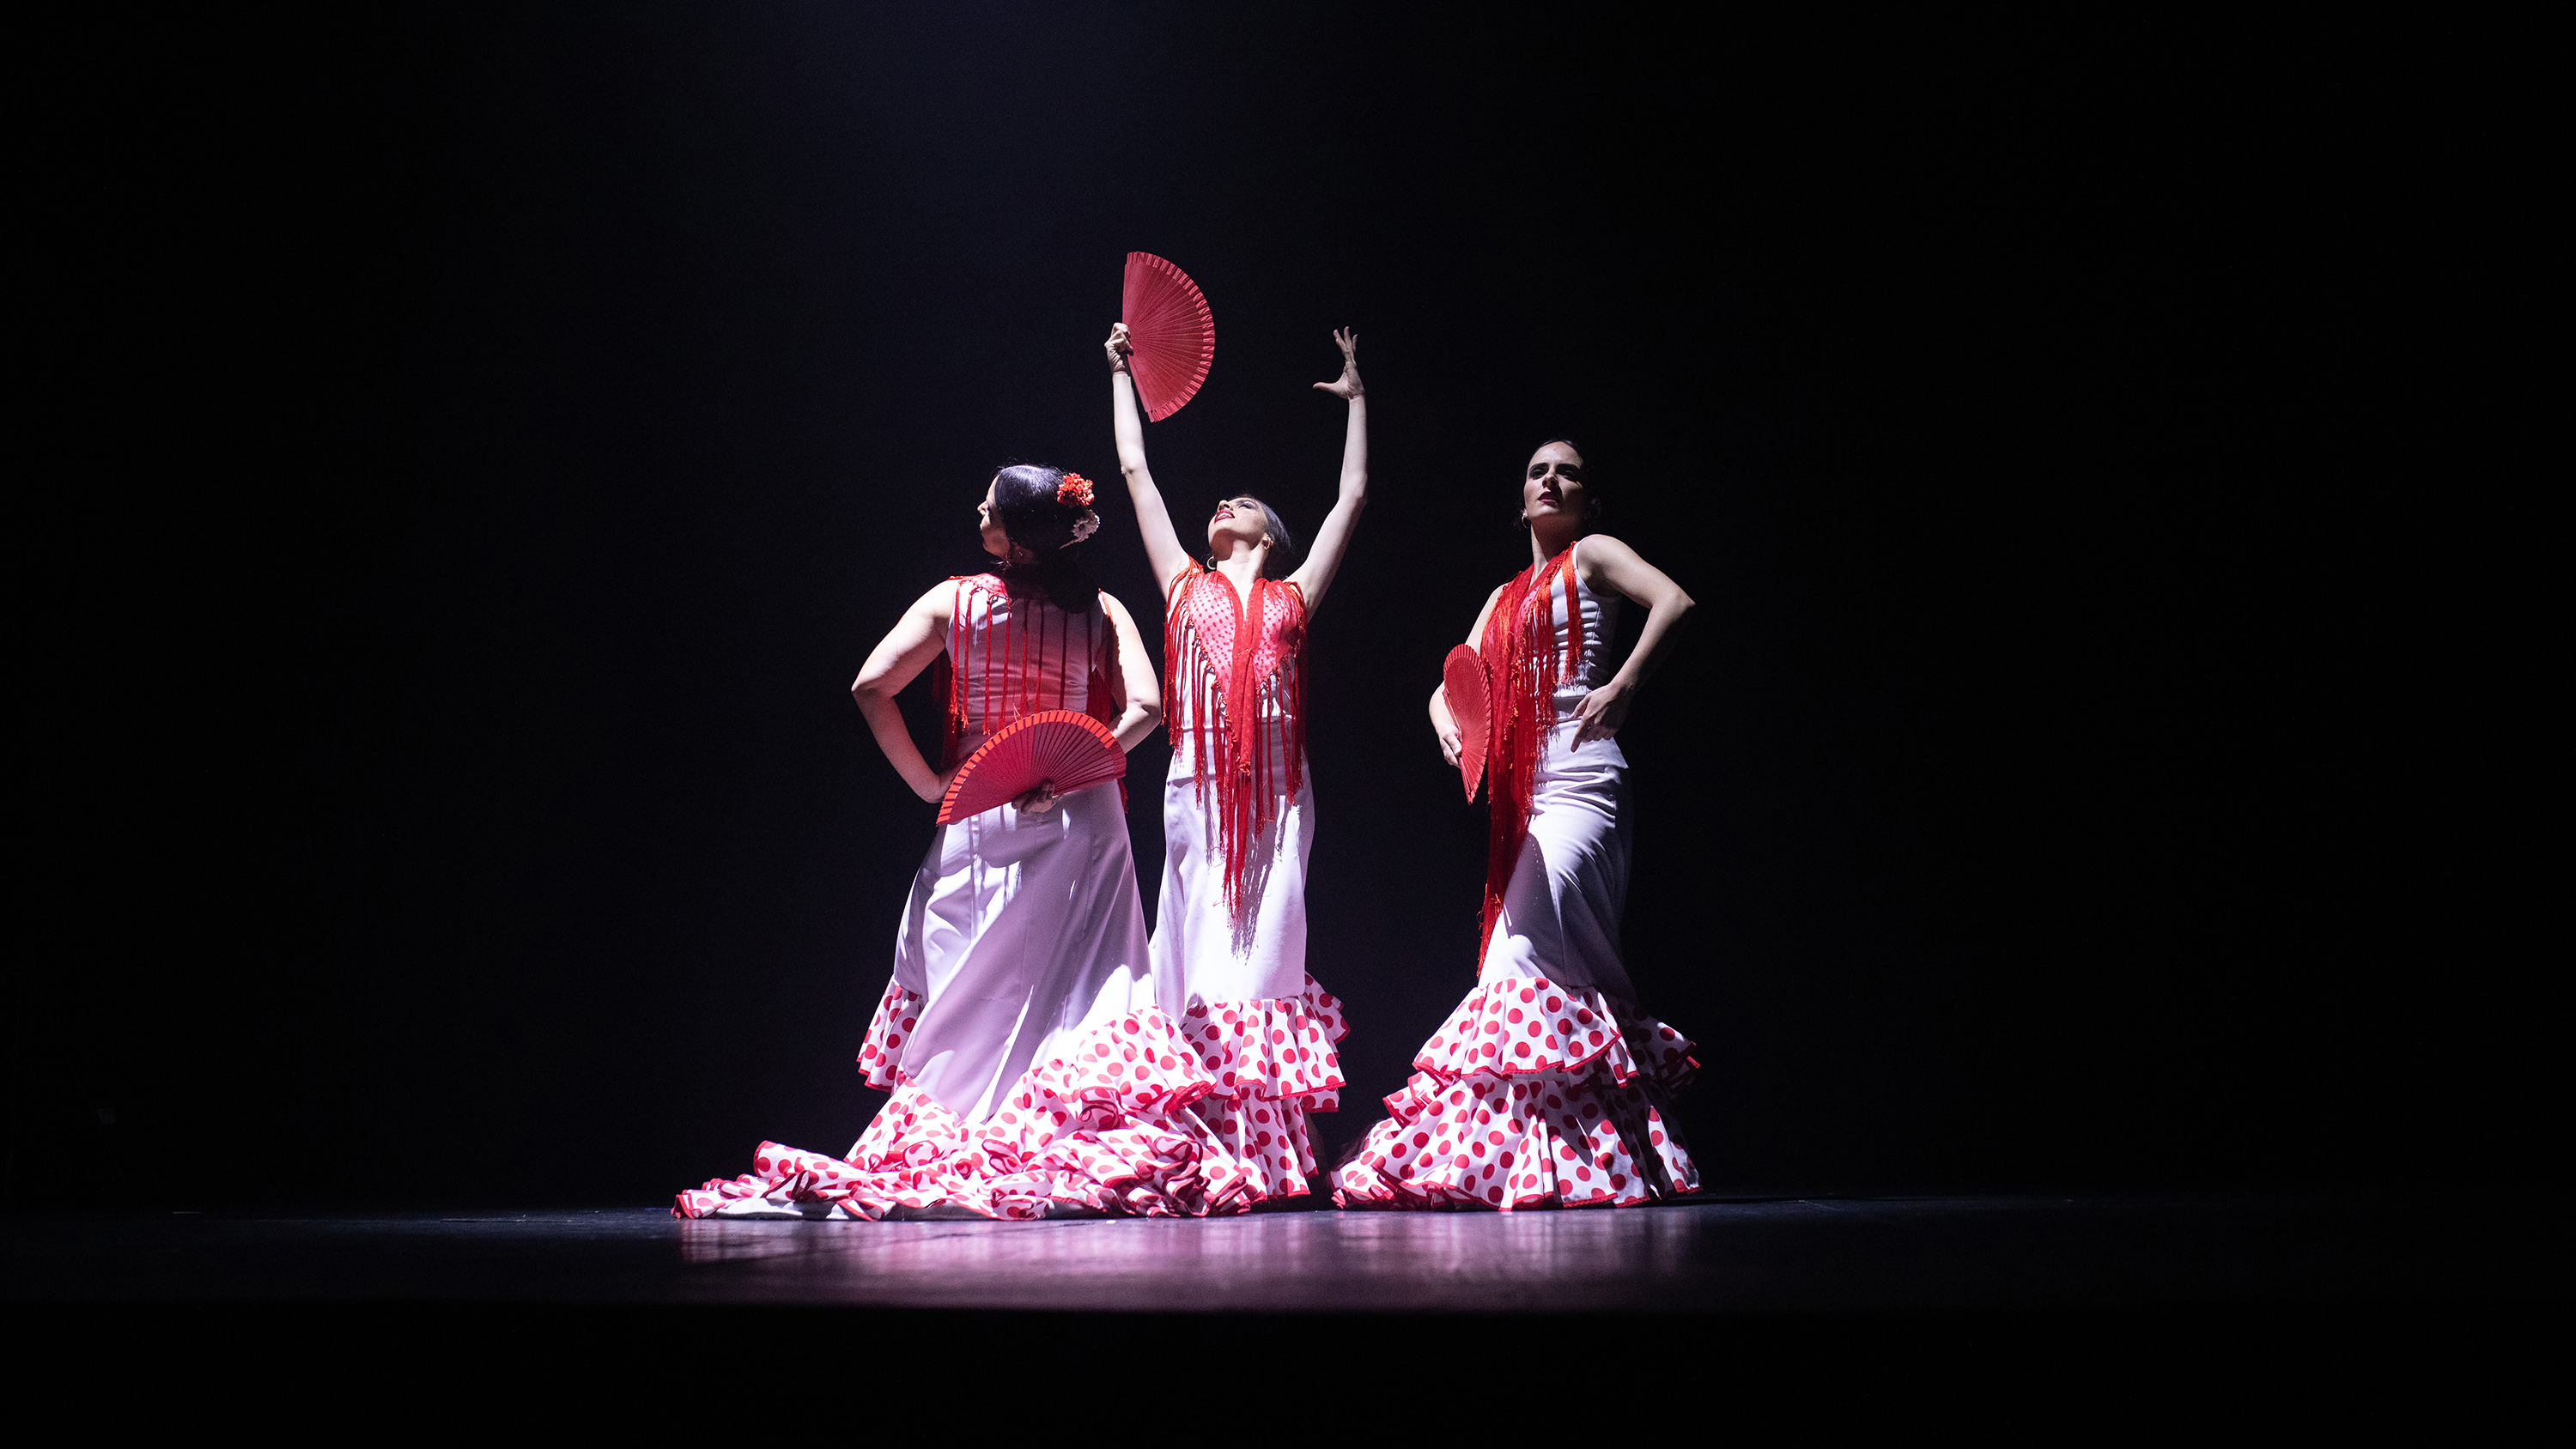 Cast Dancers of Teatro Flamenco Sevilla in Seville, Spain. Copyright / Credit: Sean Biffar.